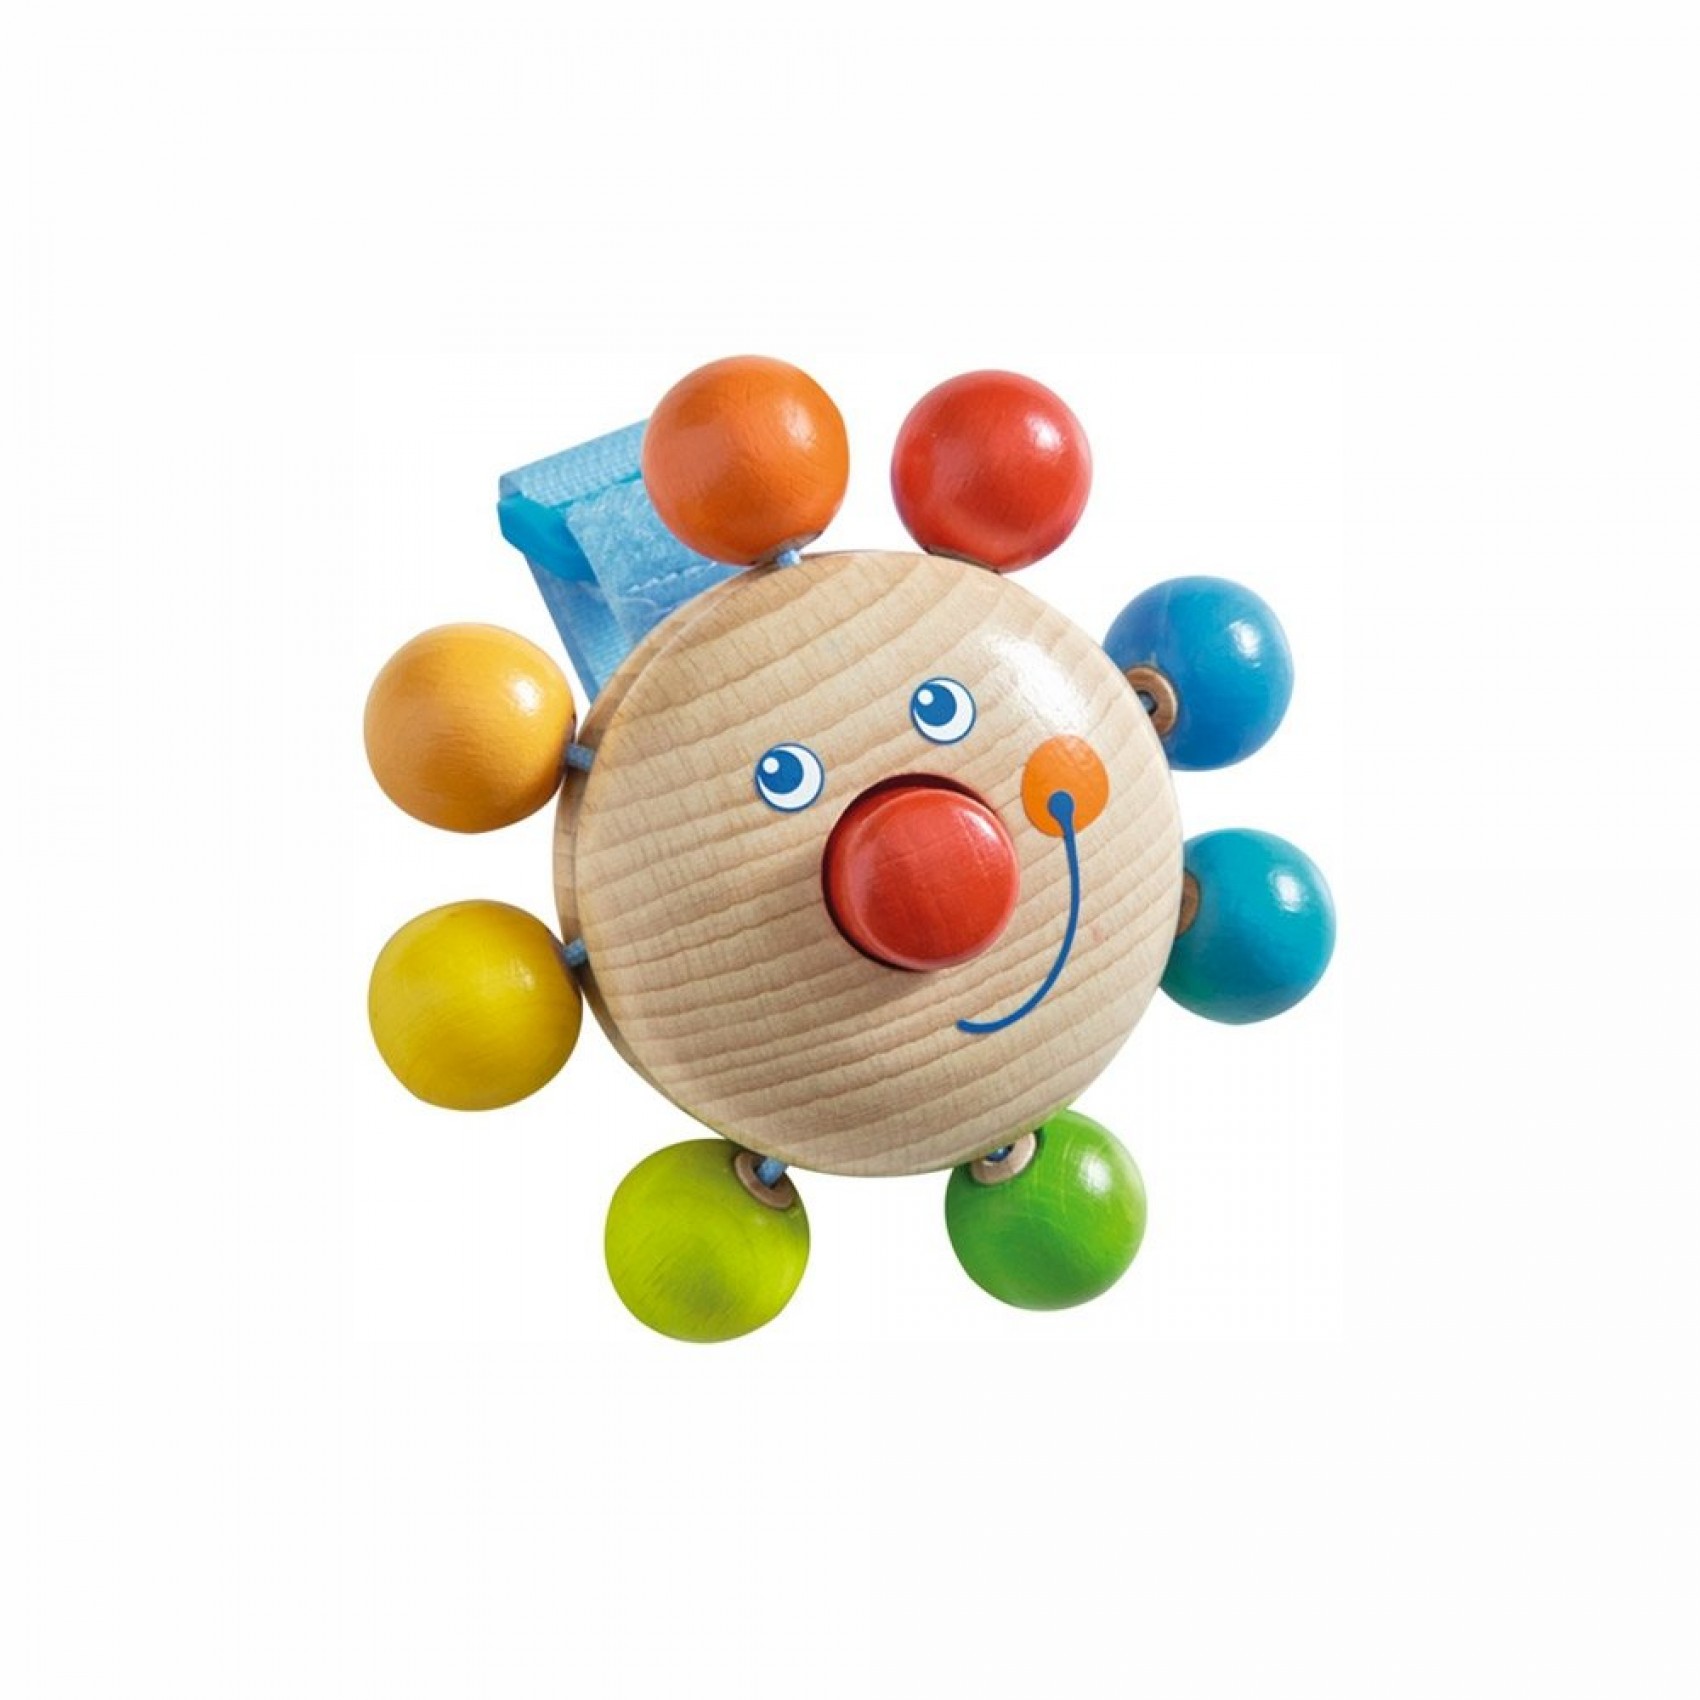 Crocolini, chaîne de landau - jouets bois Selecta